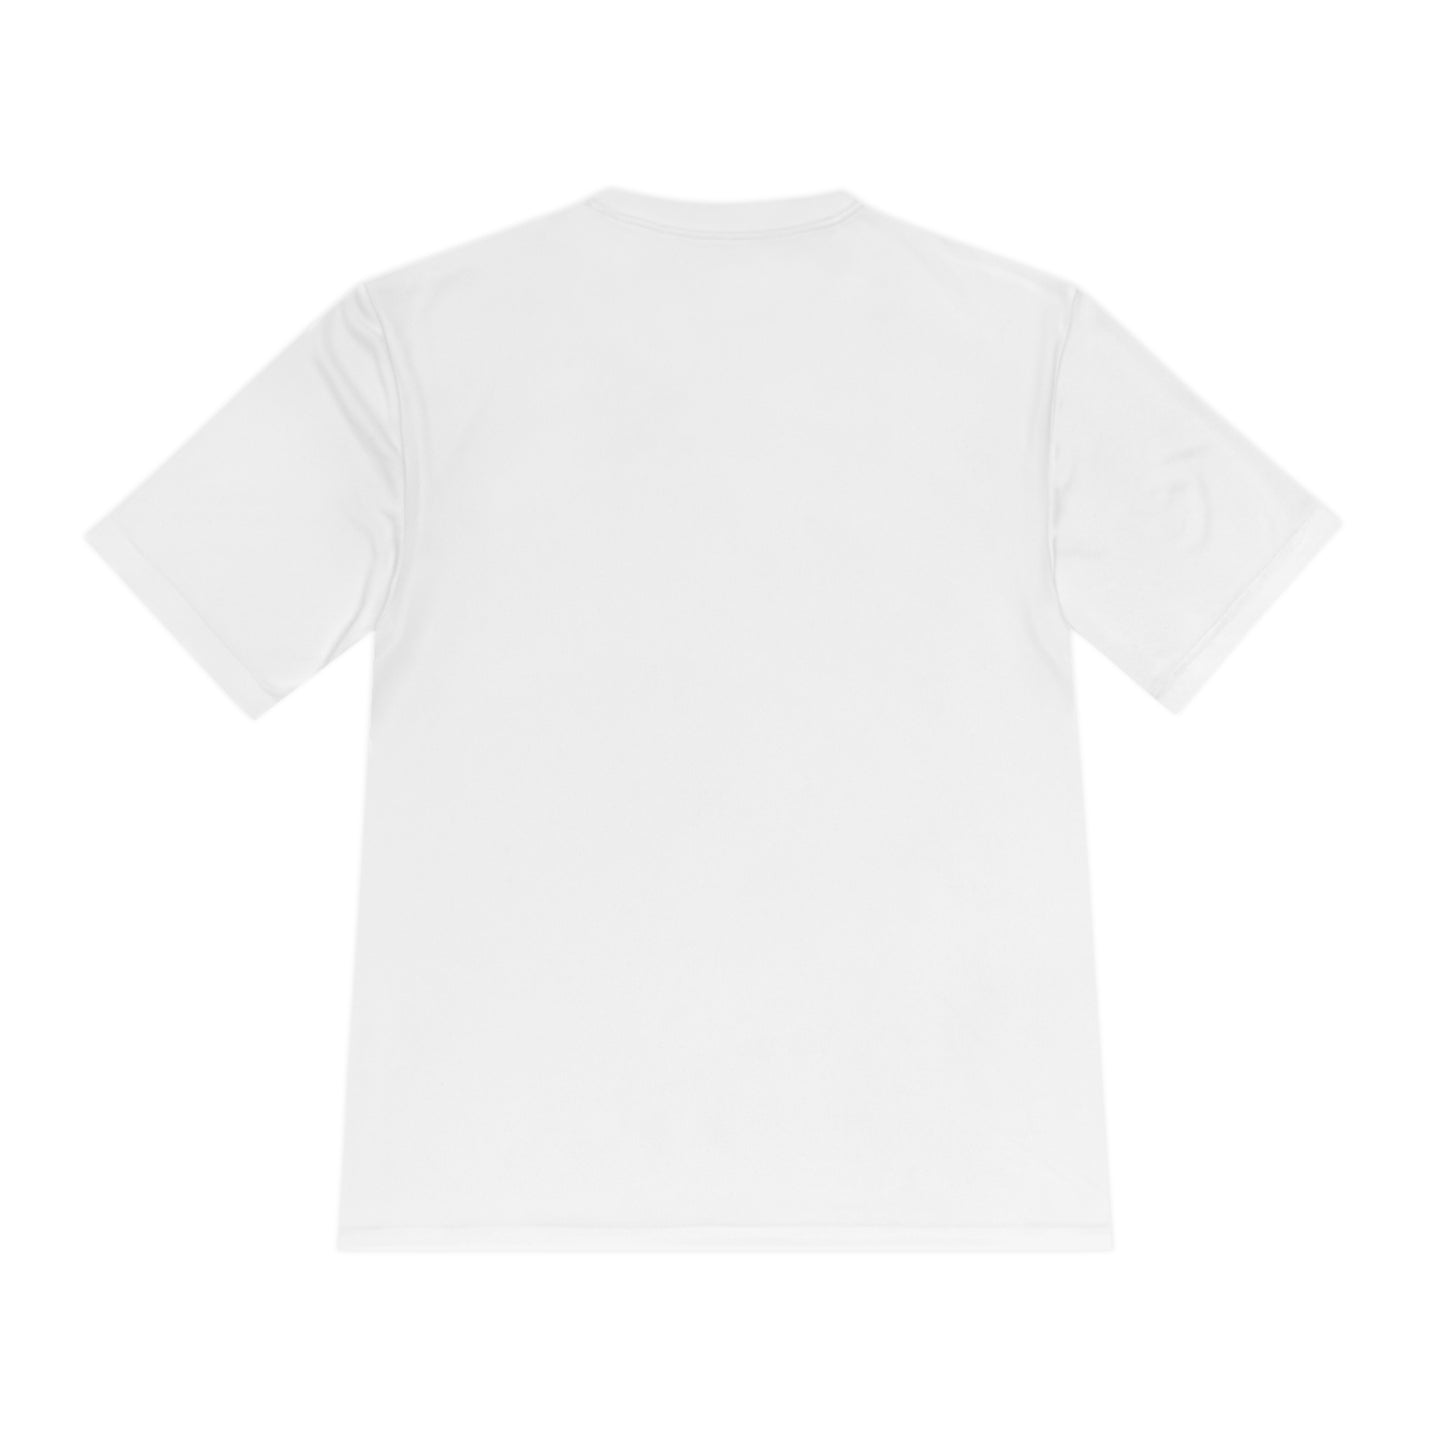 Keep It Twisted Unisex Moisture Wicking T-Shirt